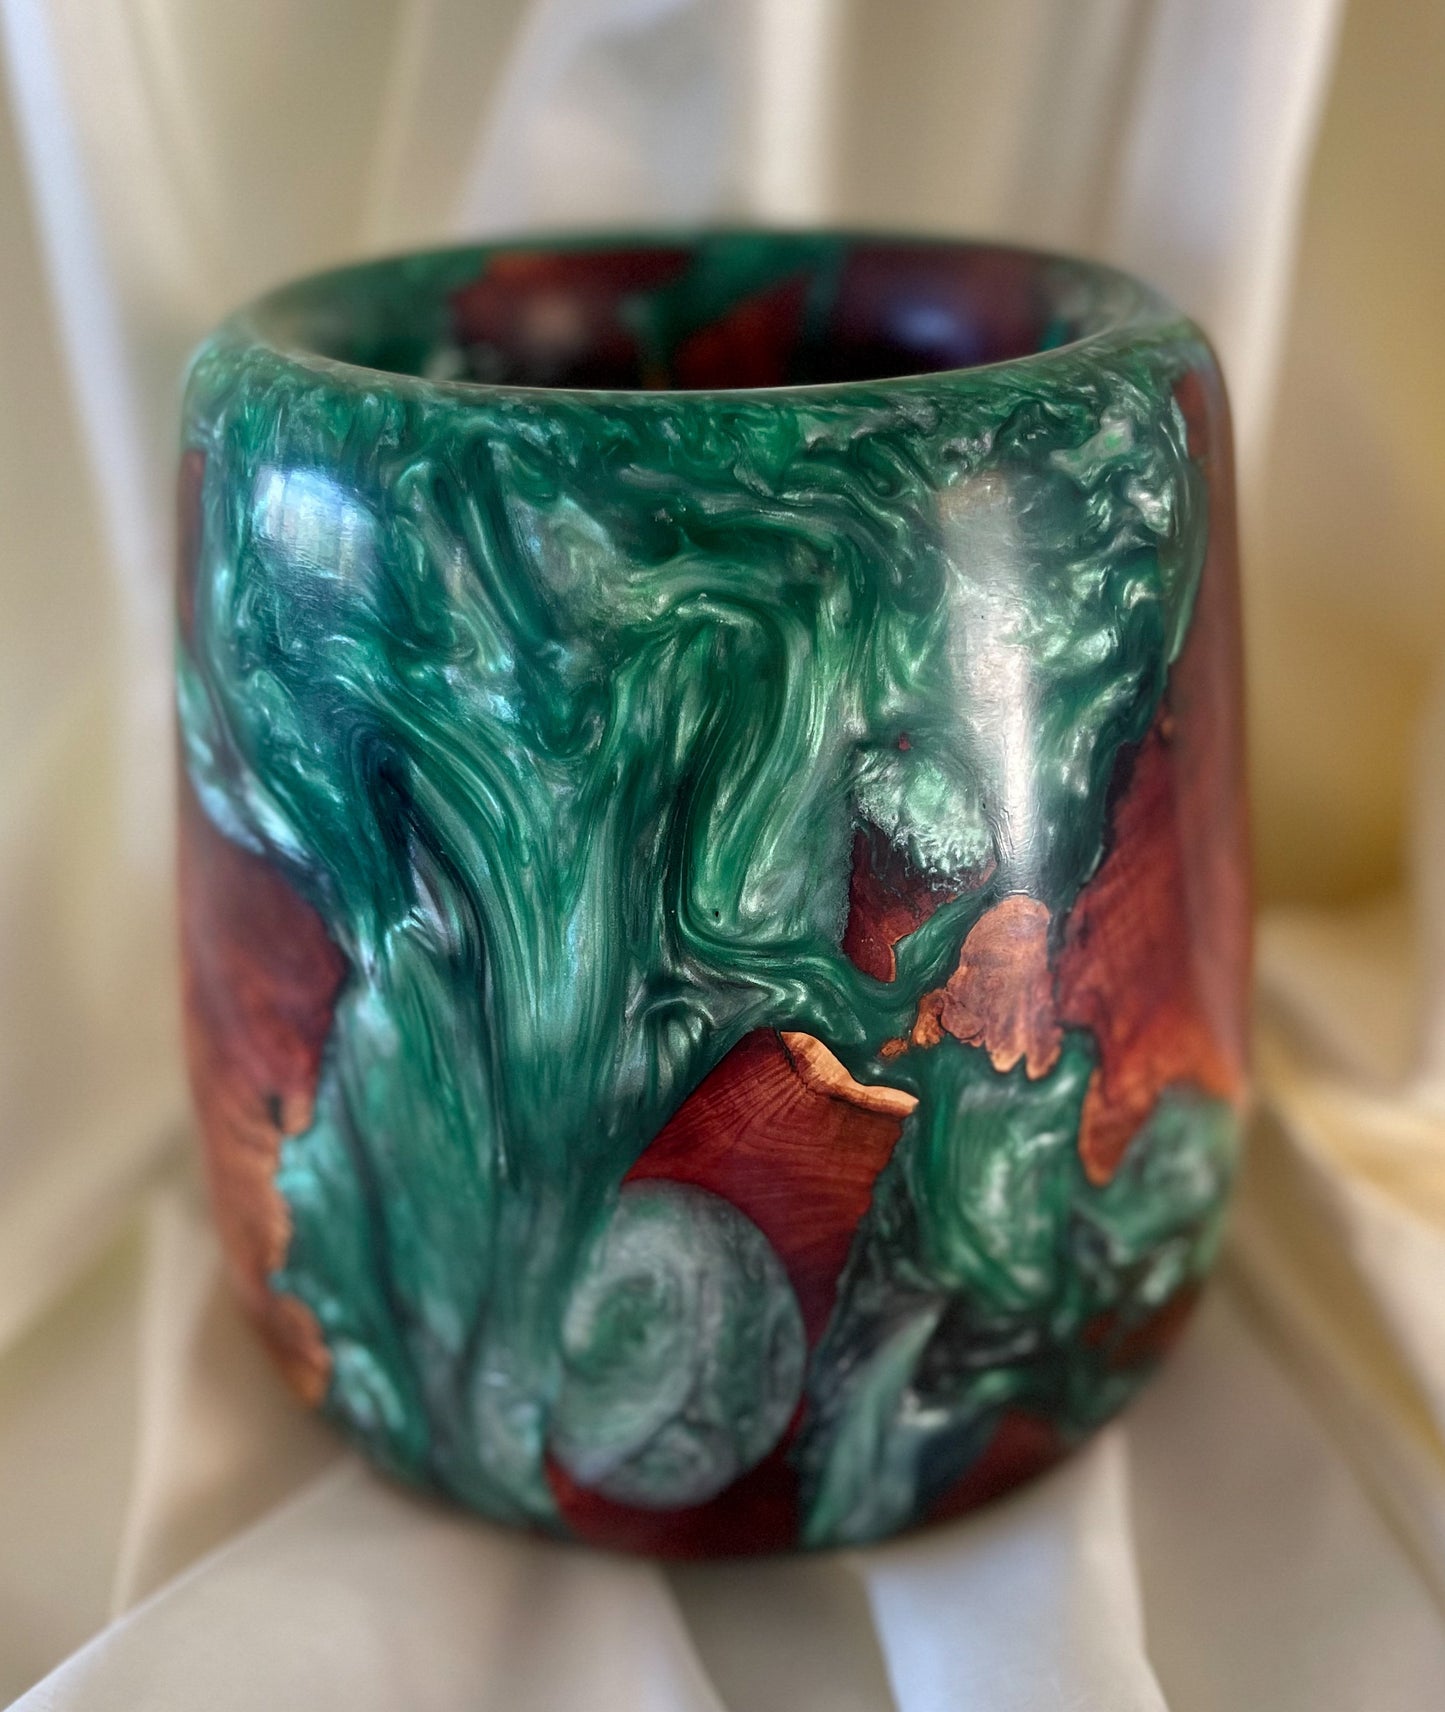 Large Manzanita Wood Vase with Green resin Inlay. 9" diameter x 8.5" tall